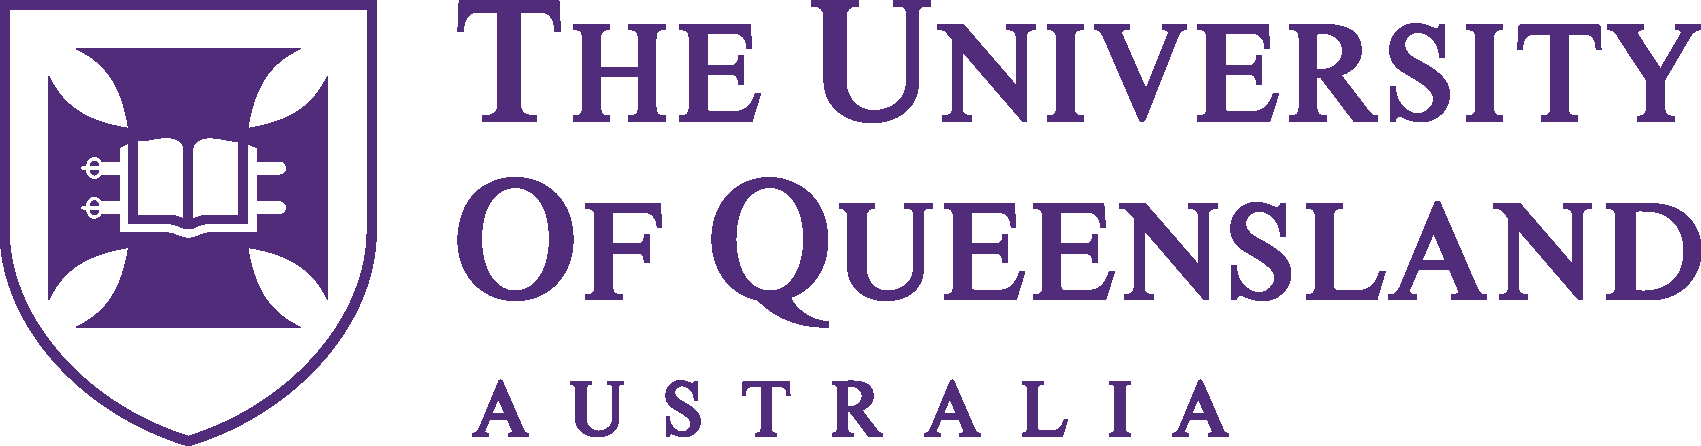 University of Queensland UQ Logo Purple.png